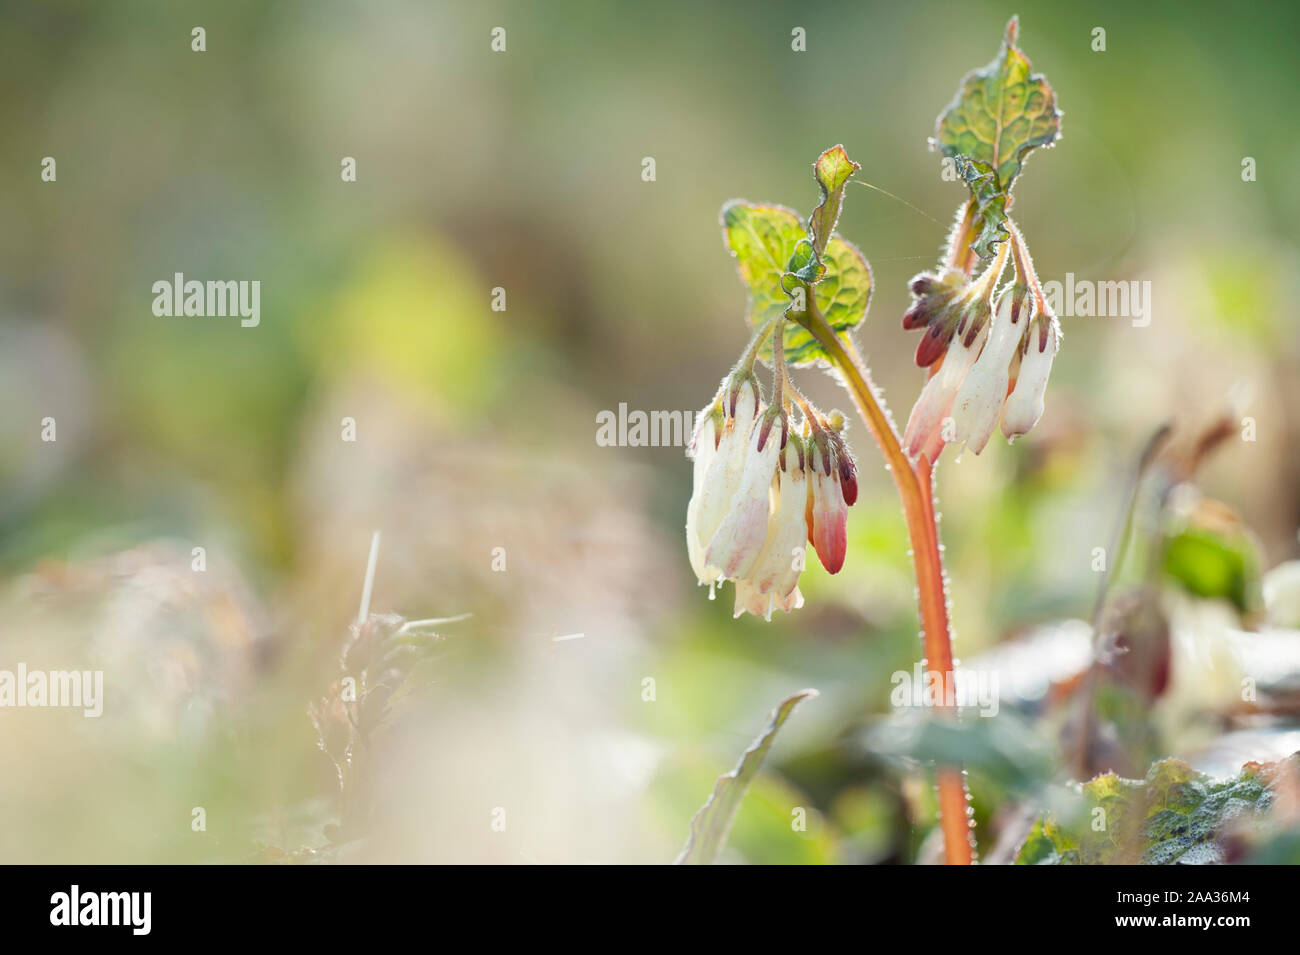 Symphytum ibericum,Kriechender Beinwell,Creeping Comfrey Stock Photo